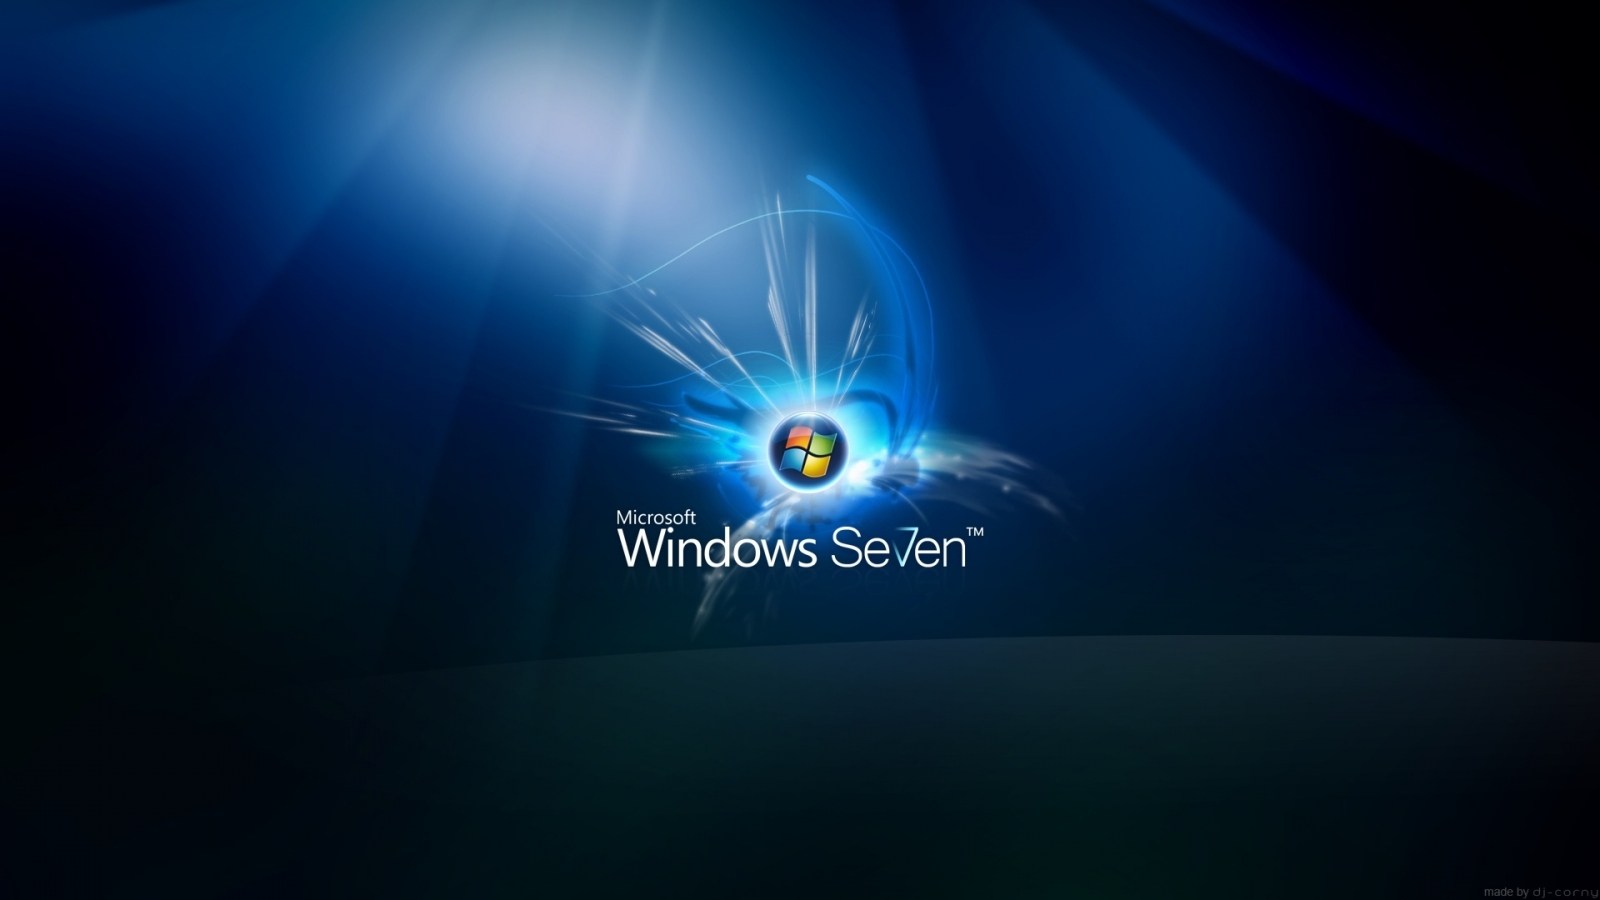 Windows Seven Glow for 1600 x 900 HDTV resolution